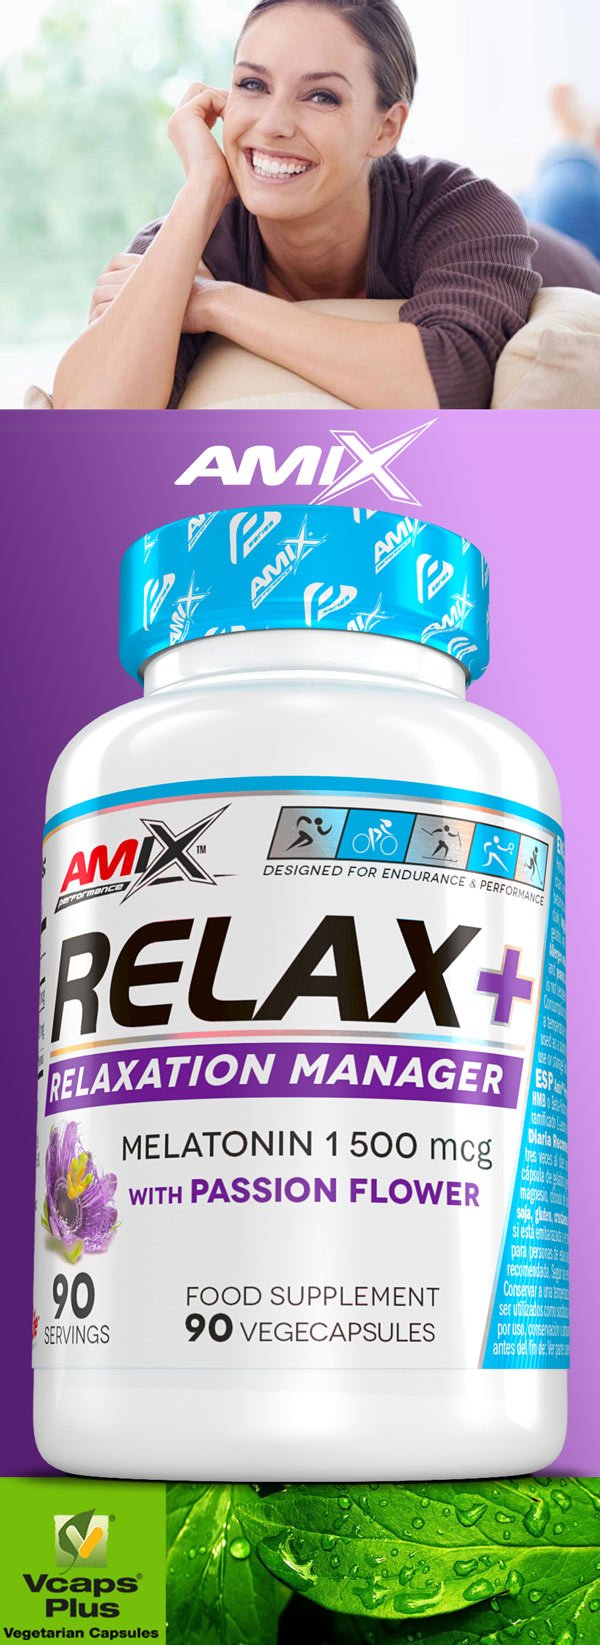 amix relax suplement baner